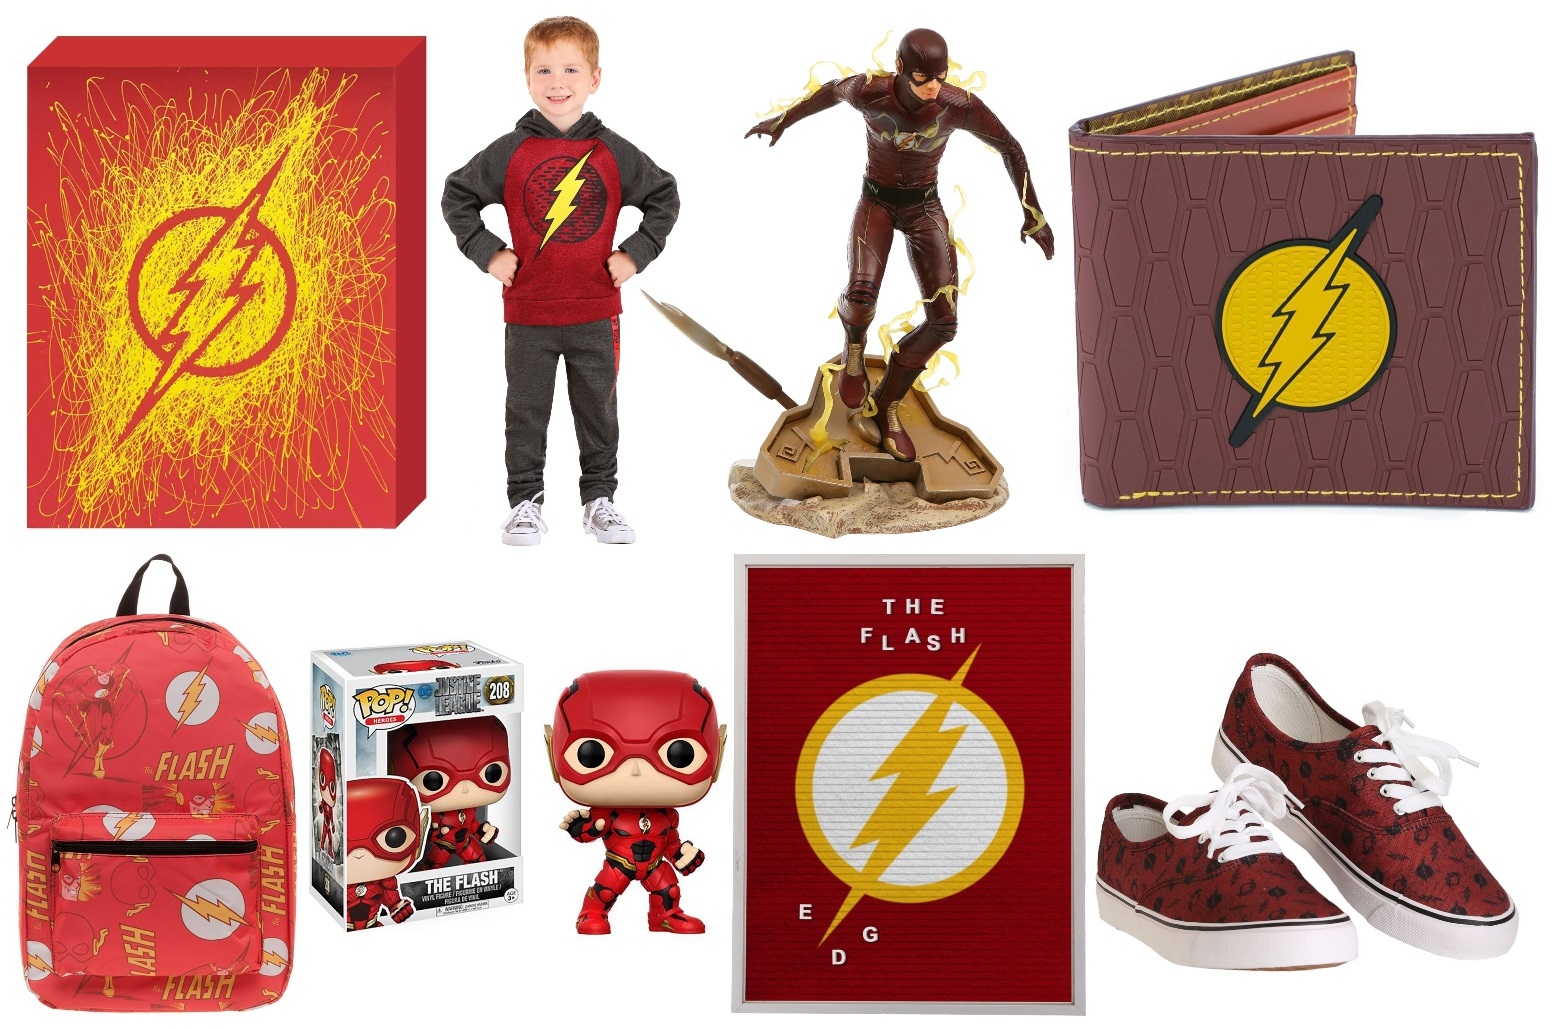 The Flash Merchandise